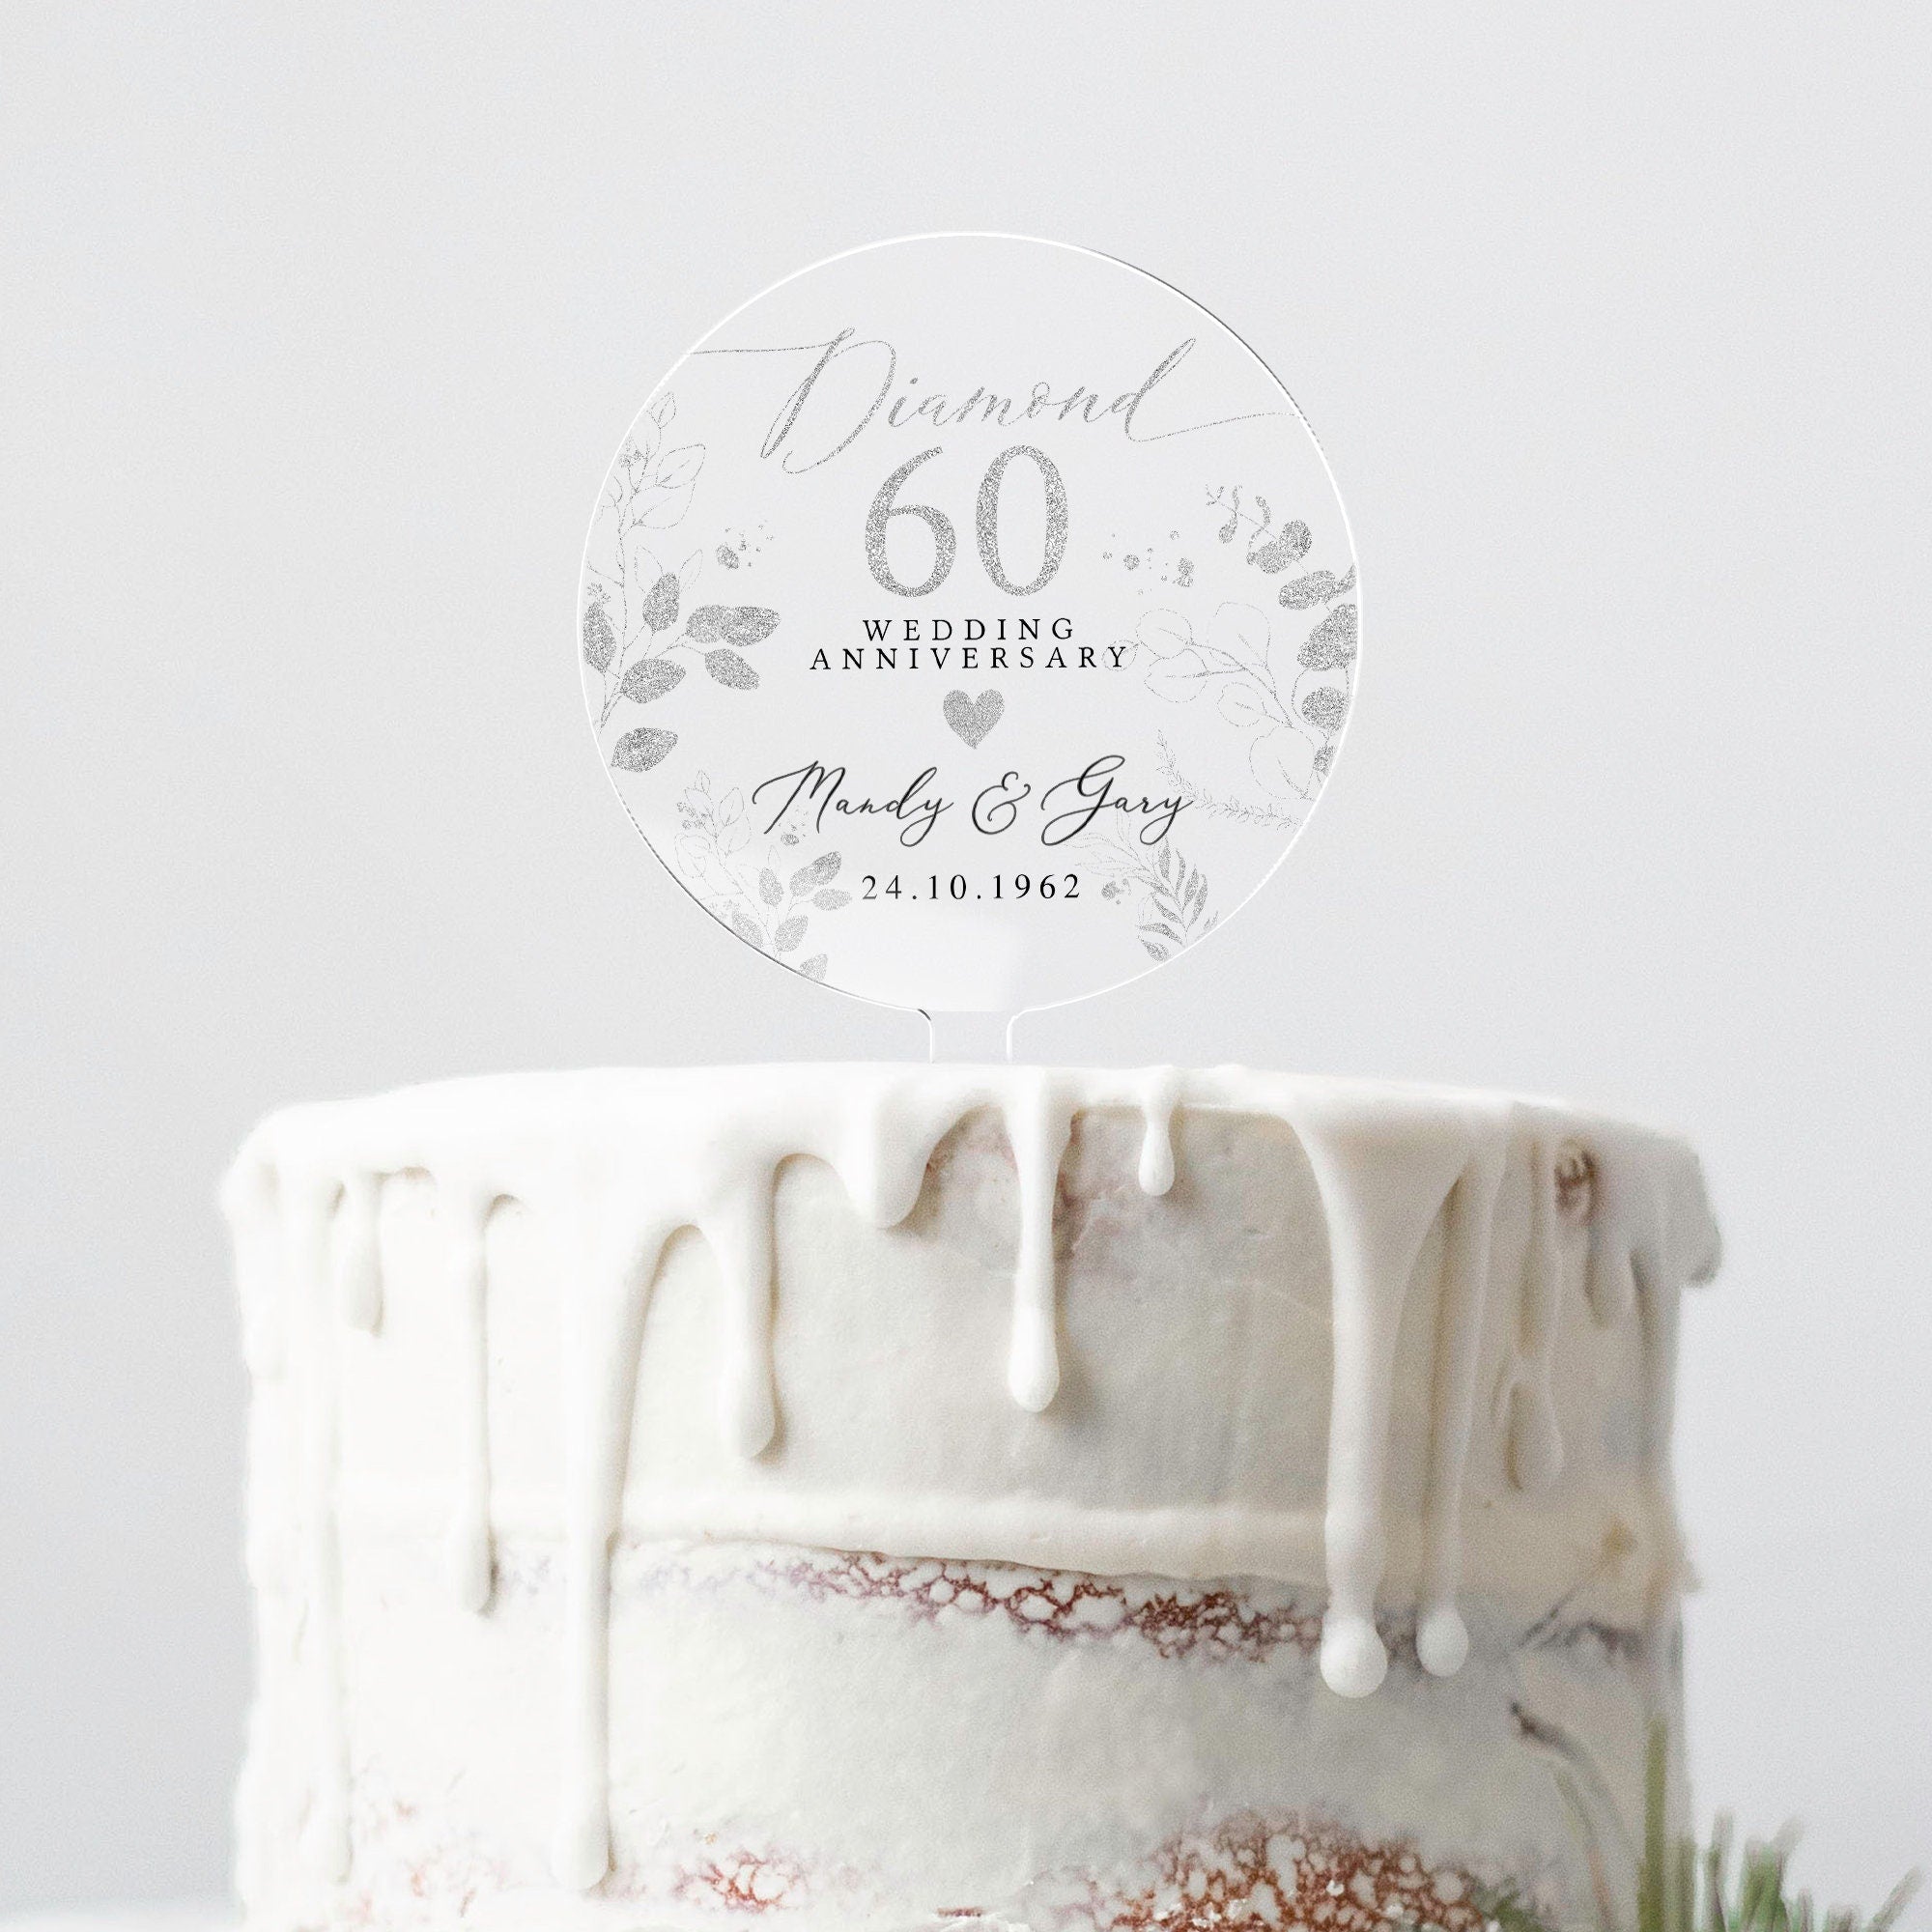 60th Wedding Anniversary Cake With A Sugar Flower Spray | Susie's Cakes